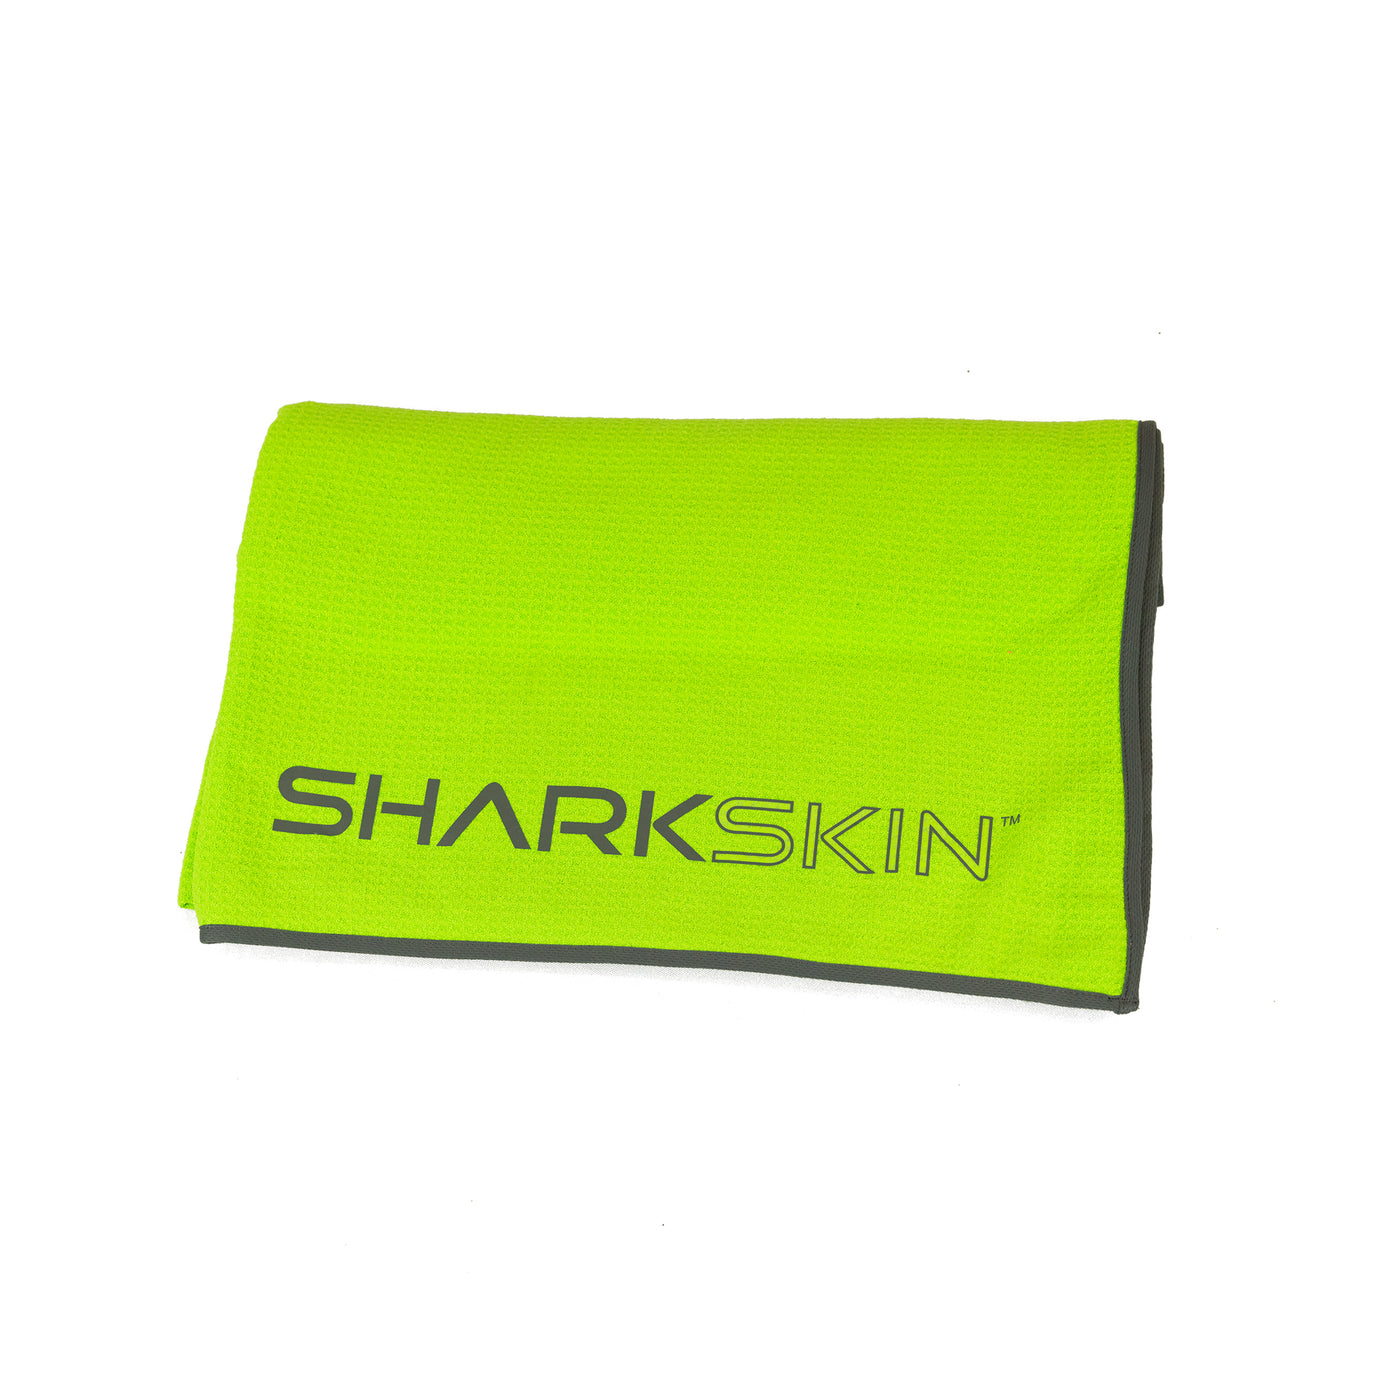 SHARKSKIN SAND FREE BEACH TOWEL